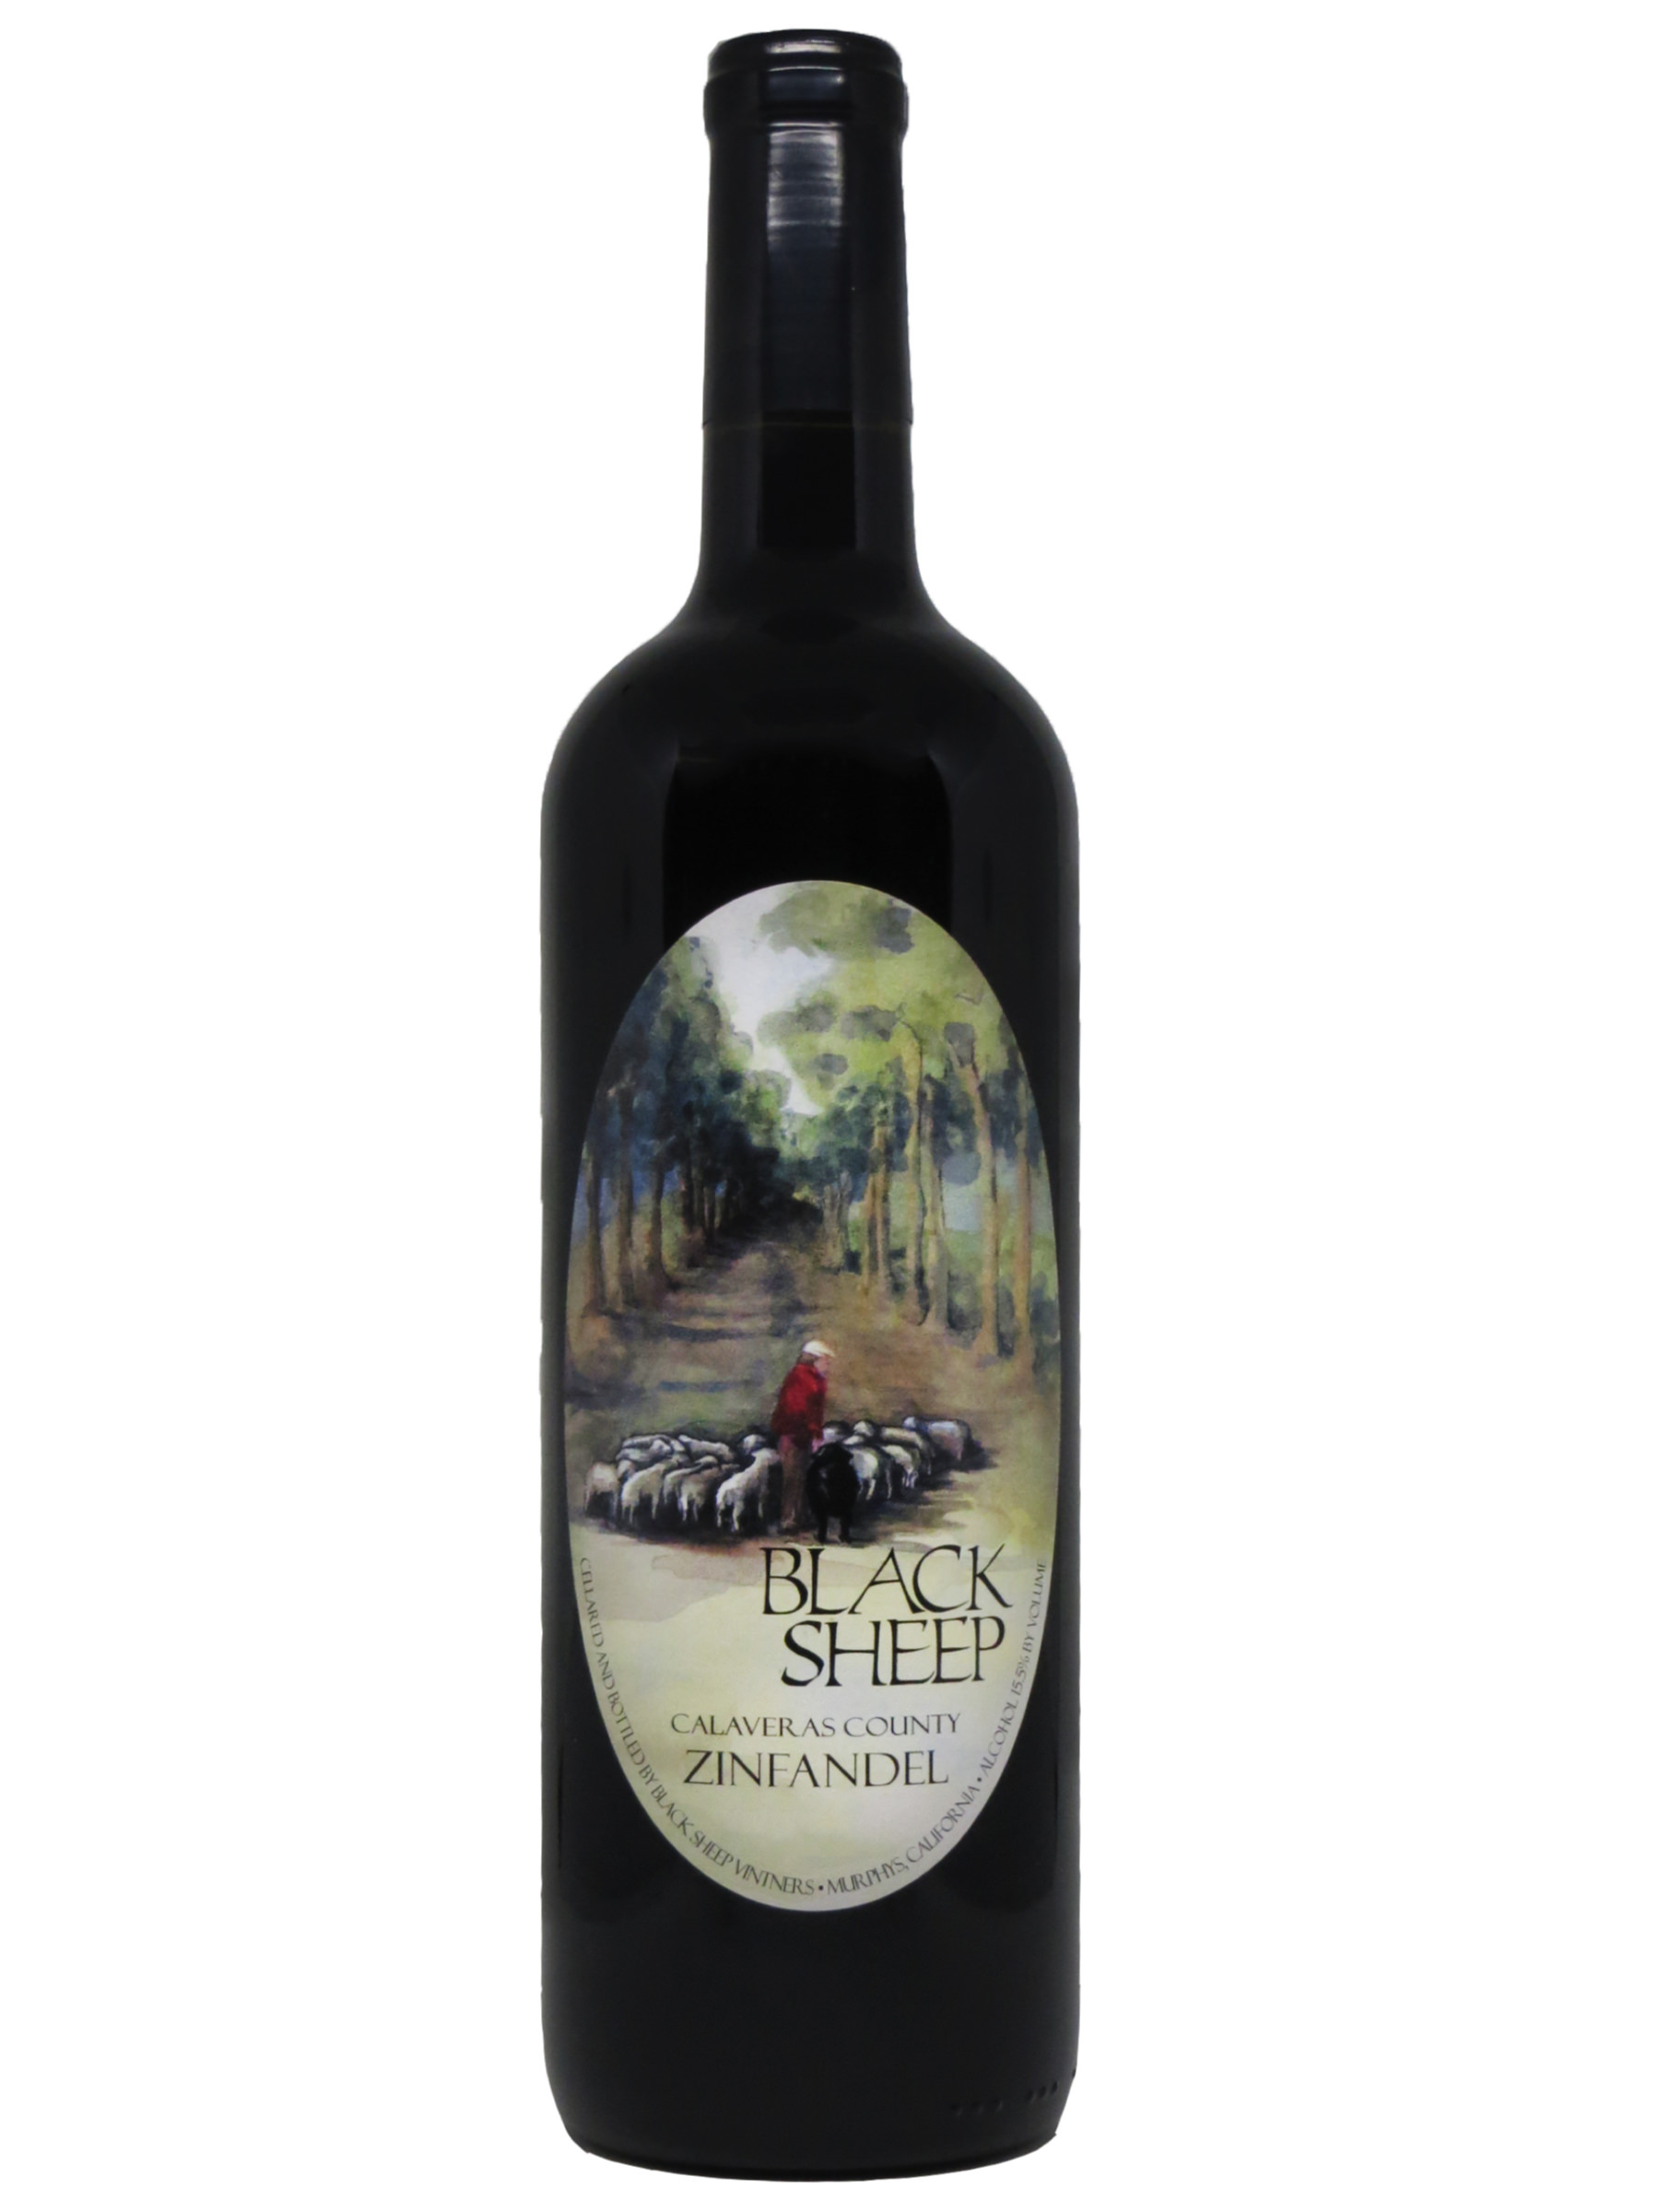 Amador County Fair winning bottle of Black Sheep Winery's 2018 Calaveras County Zinfandel